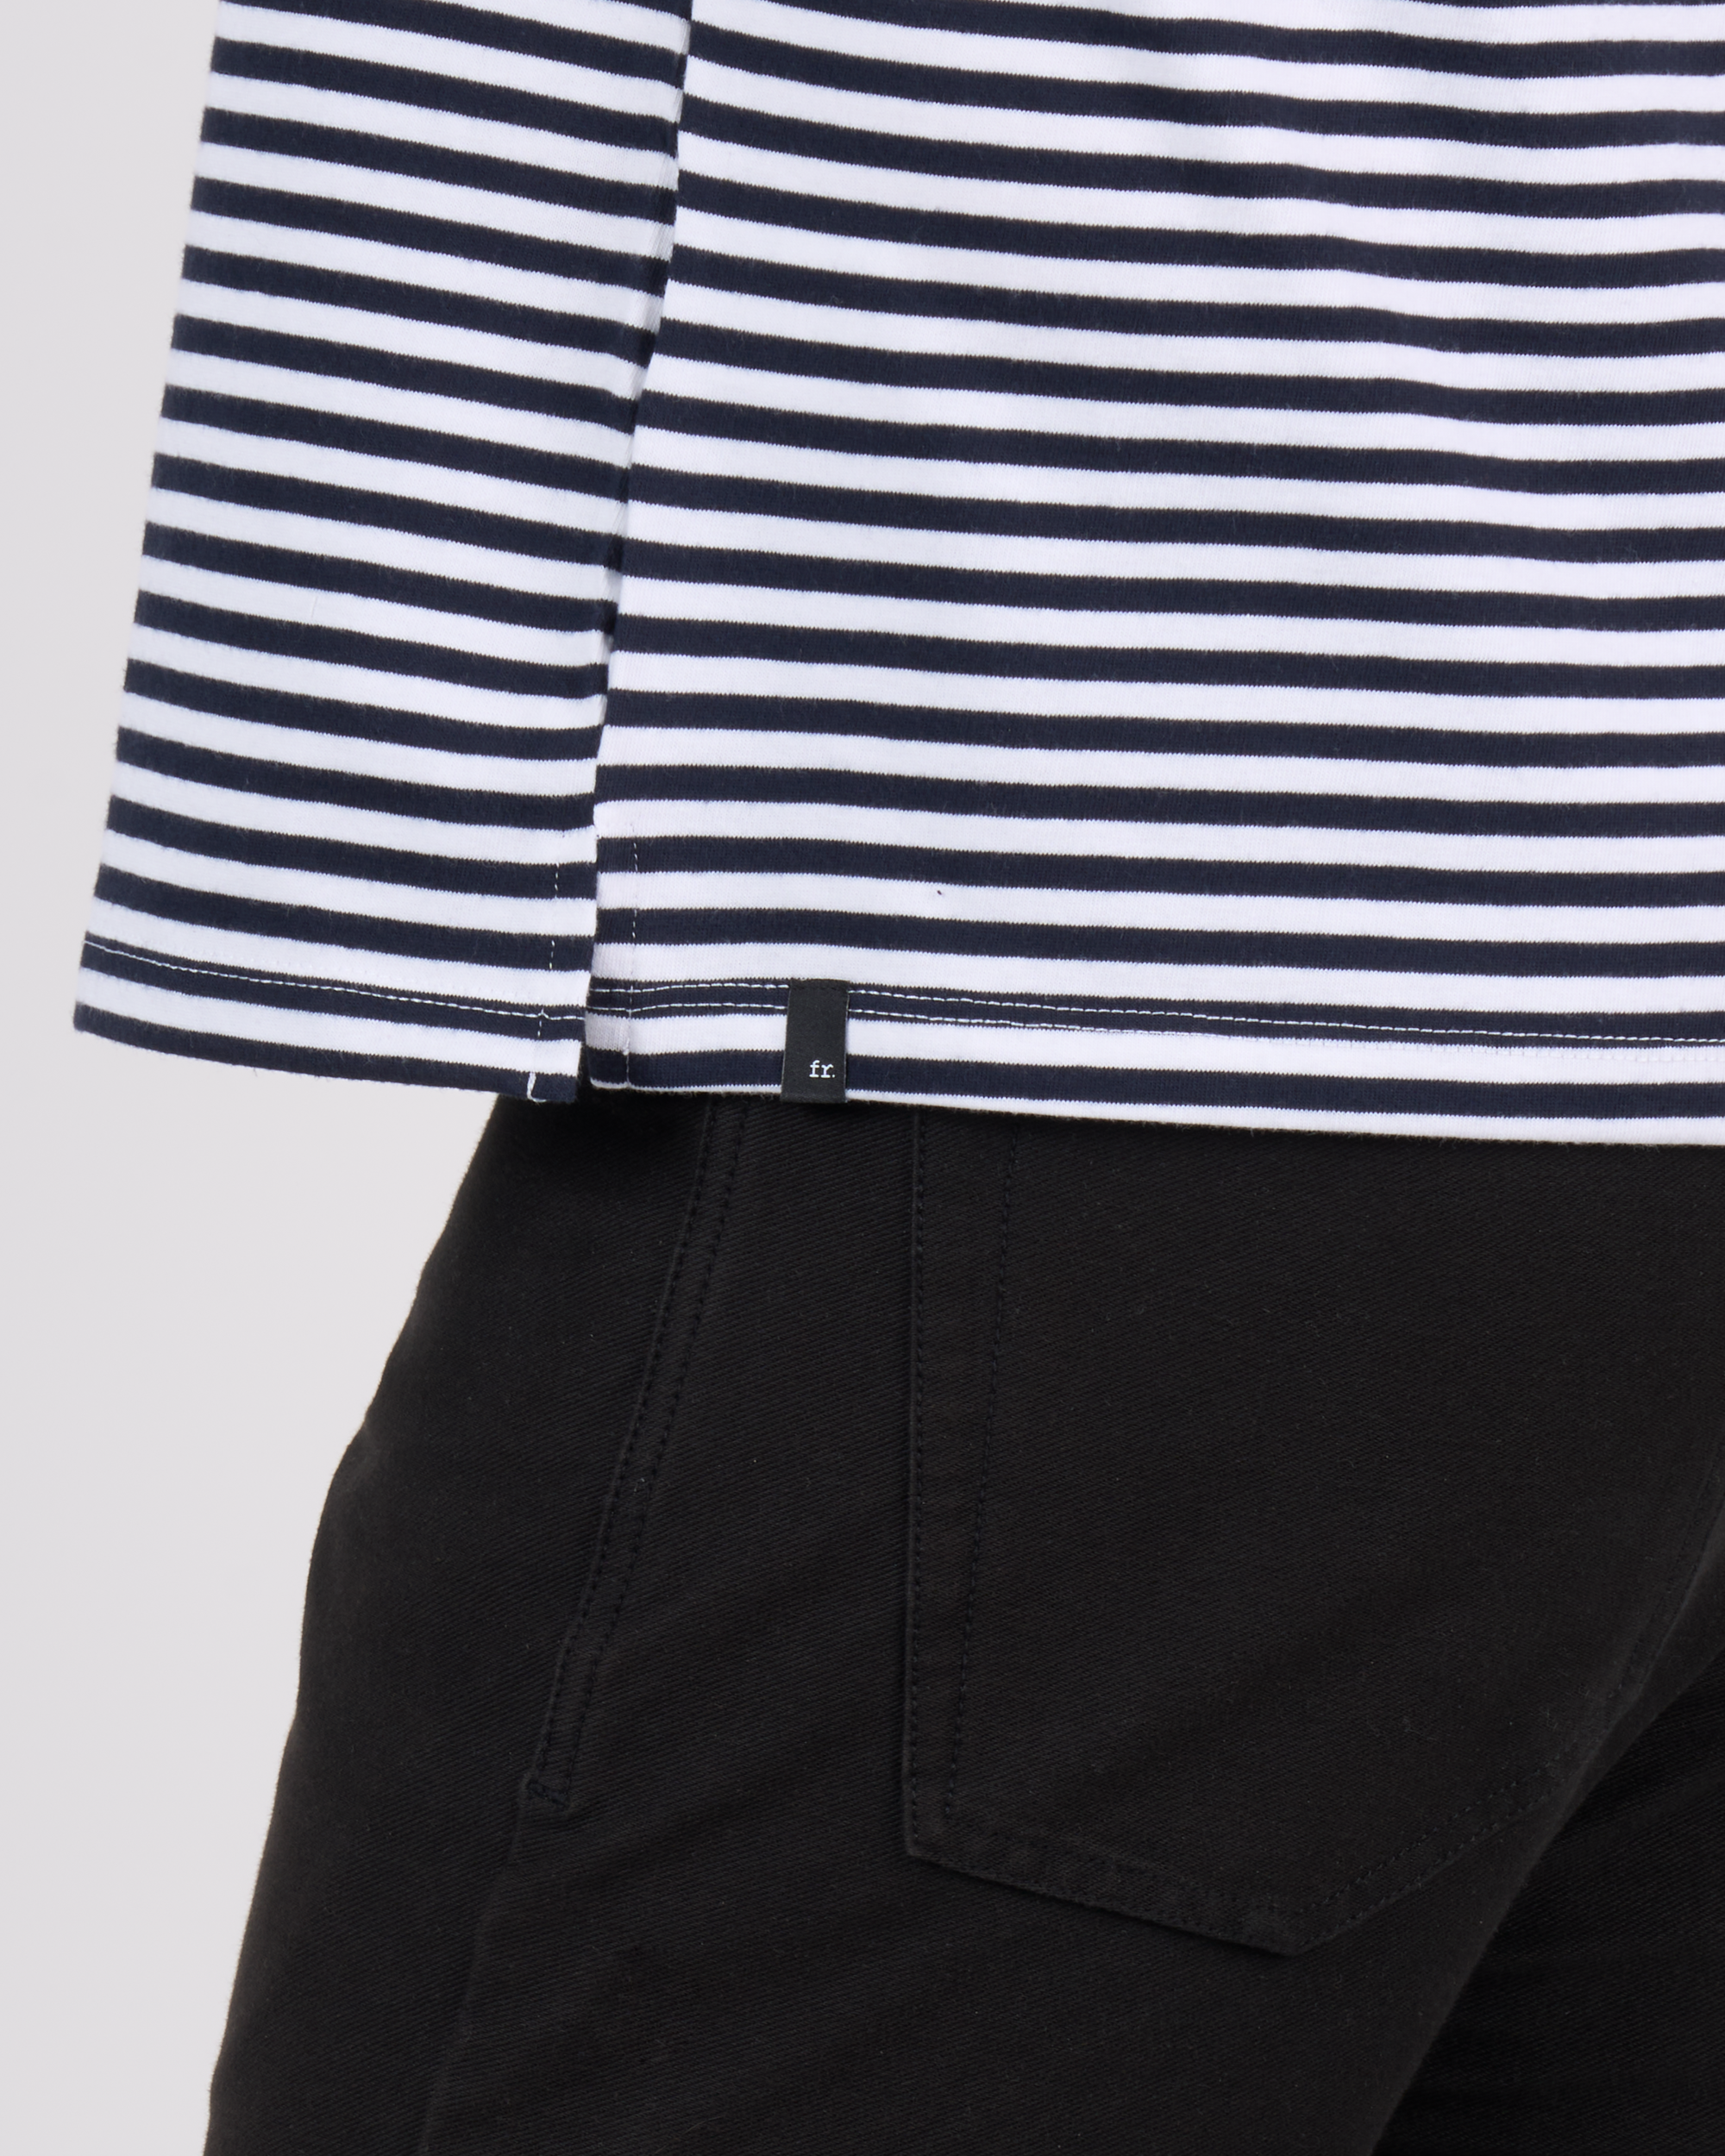 Foreign Rider Co Cotton Navy White Vintage Stripe T-Shirt Bottom Split Side Seam